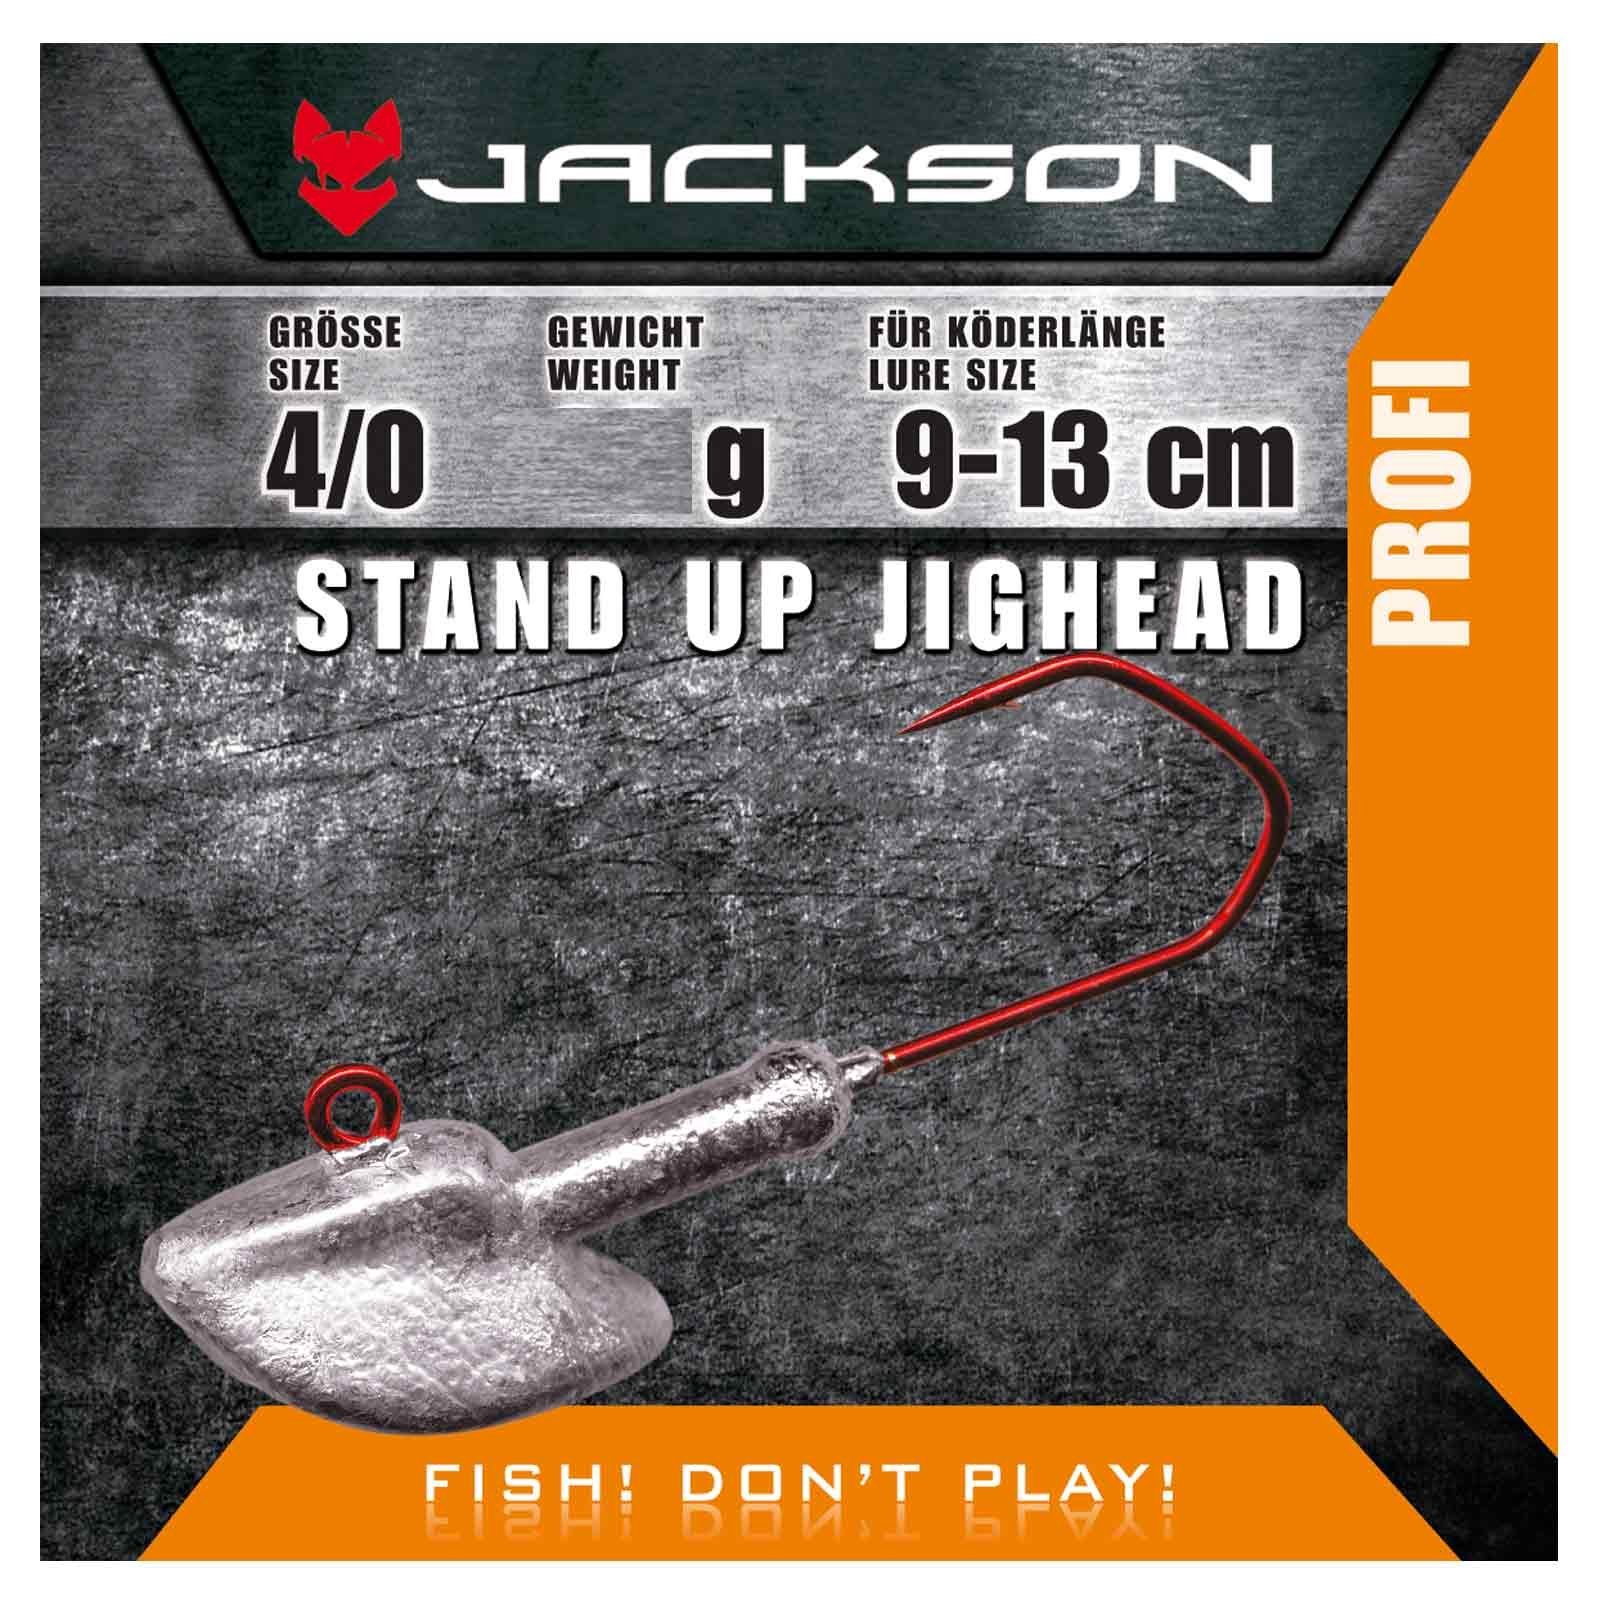 Jackson Fishing Jighaken, Jackson 9–13 4/0 Jighead Up cm 24g Stand VMC für Köderlänge